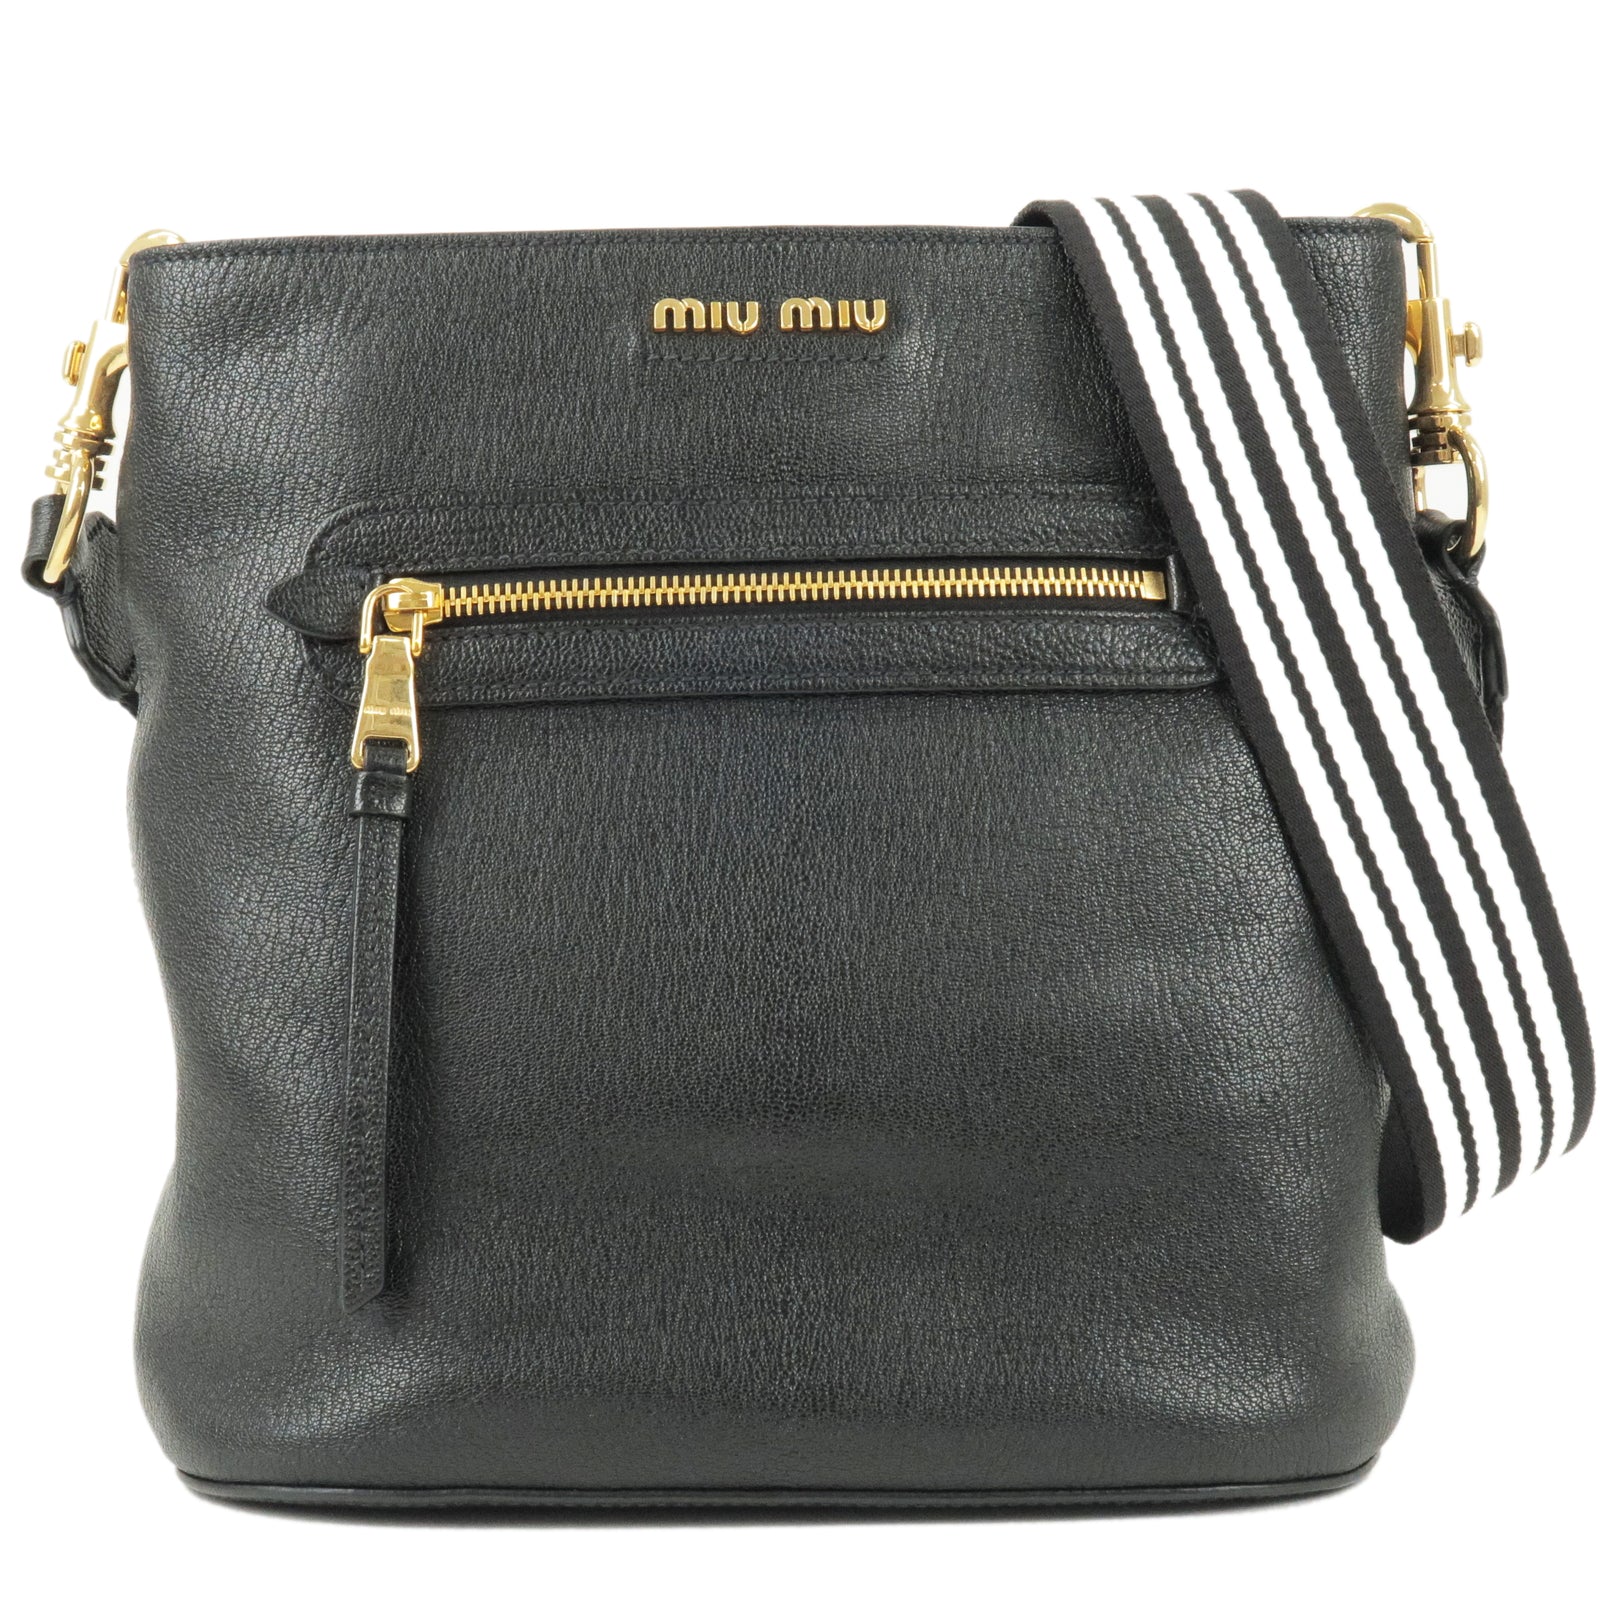 MIU-MIU-Logo-Leather-Shoulder-Bag-Hand-Bag-NERO-Black-5BE026 – dct